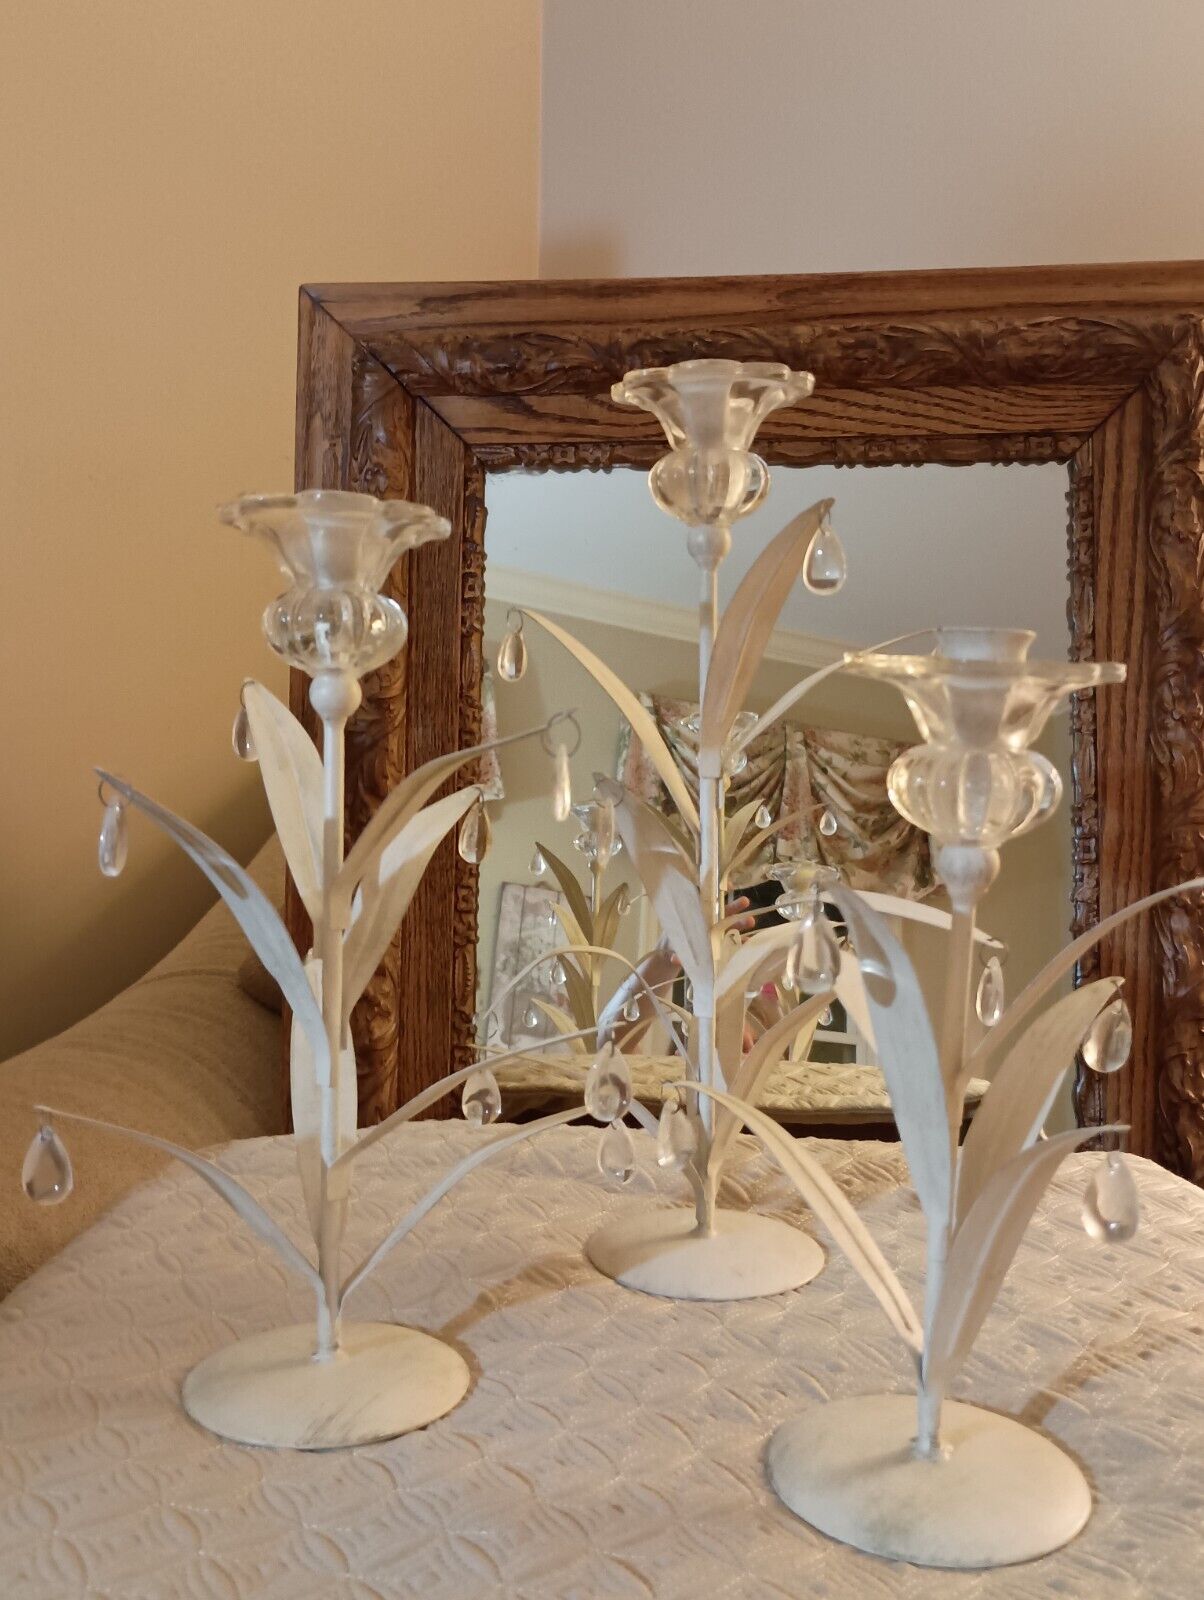 Floral art deco metal and glass candlestick set *UNIQUE*VINTAGE*WHIMSICAL*